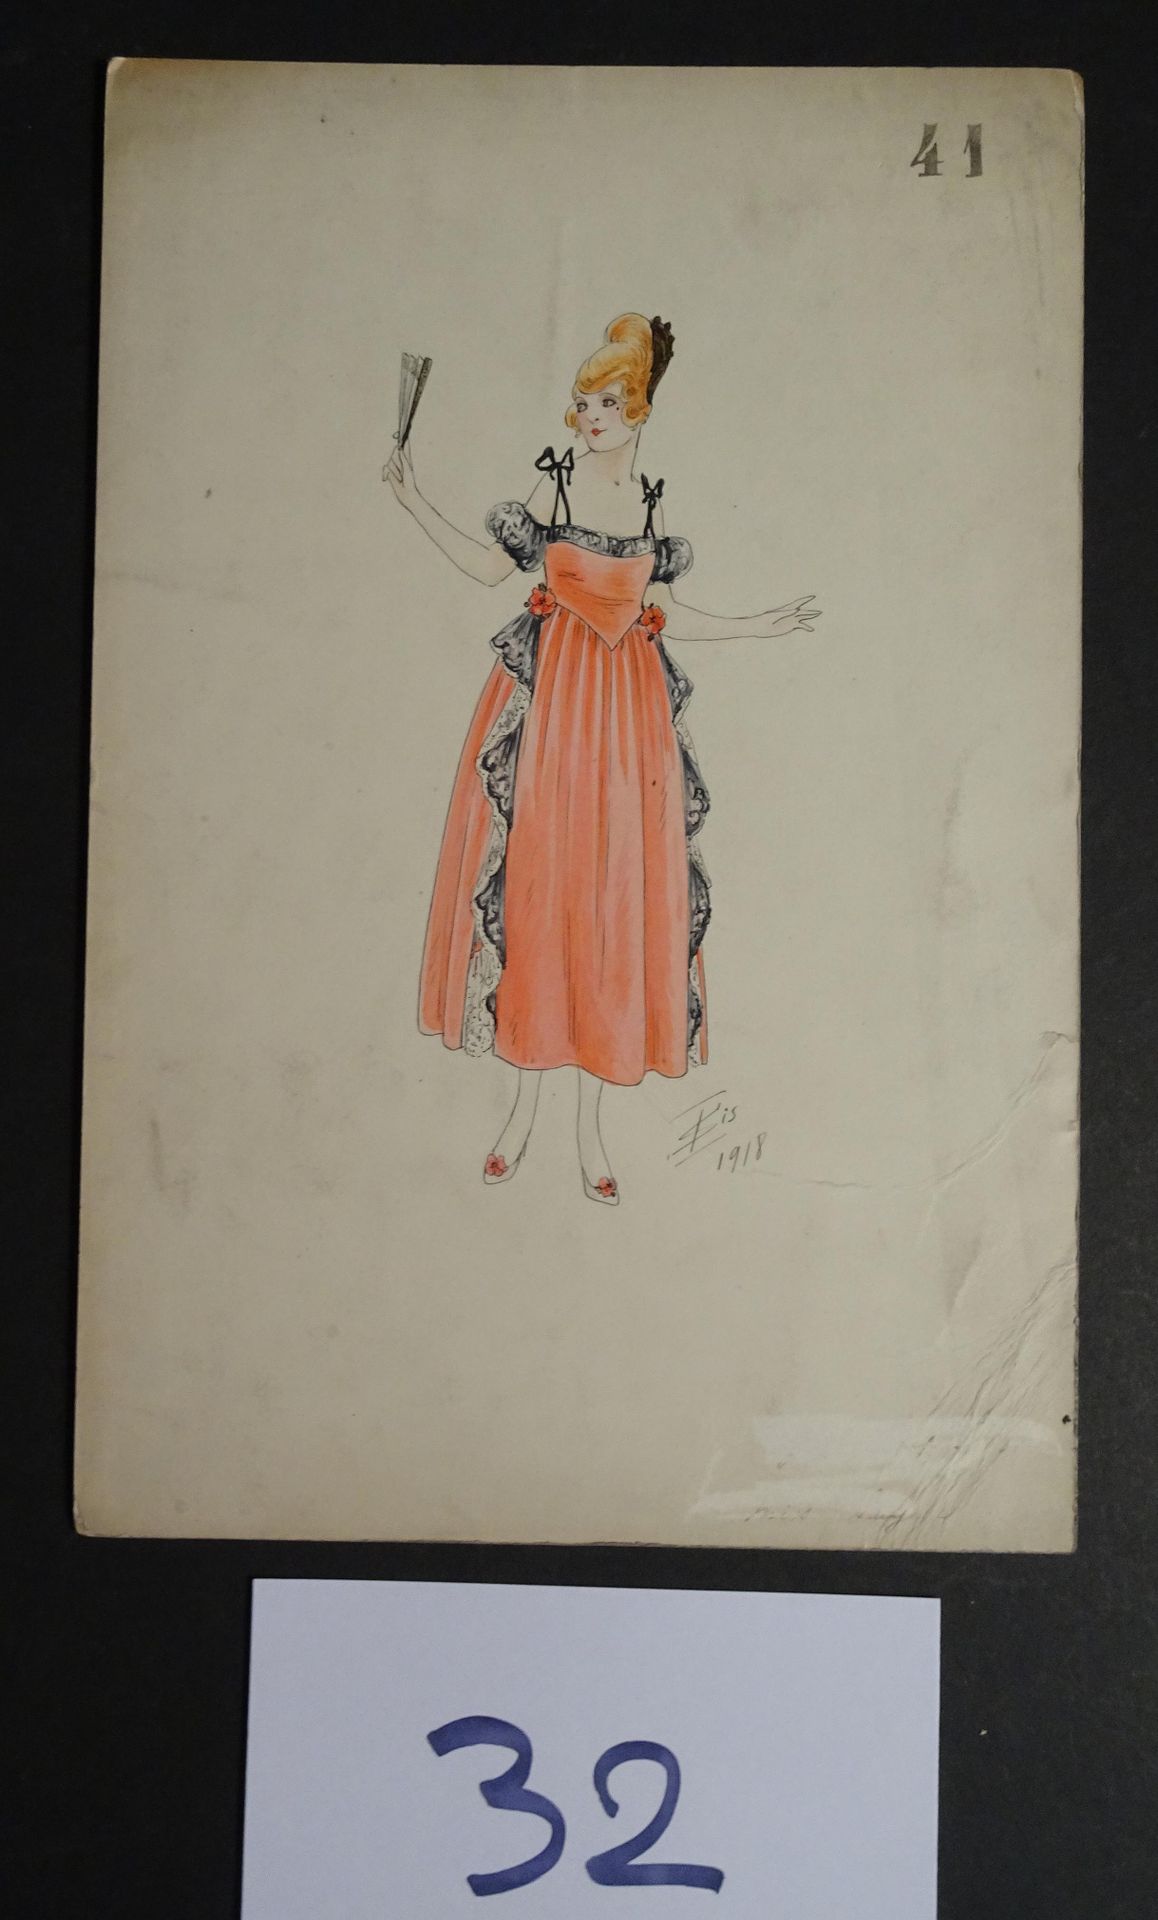 SOKOLOFF SOKOLOFF IGOR (20世纪初)

"拿着扇子的女人"。钢笔、墨水和水彩画。右下角有图案，日期为1918年。27 x 18厘米。